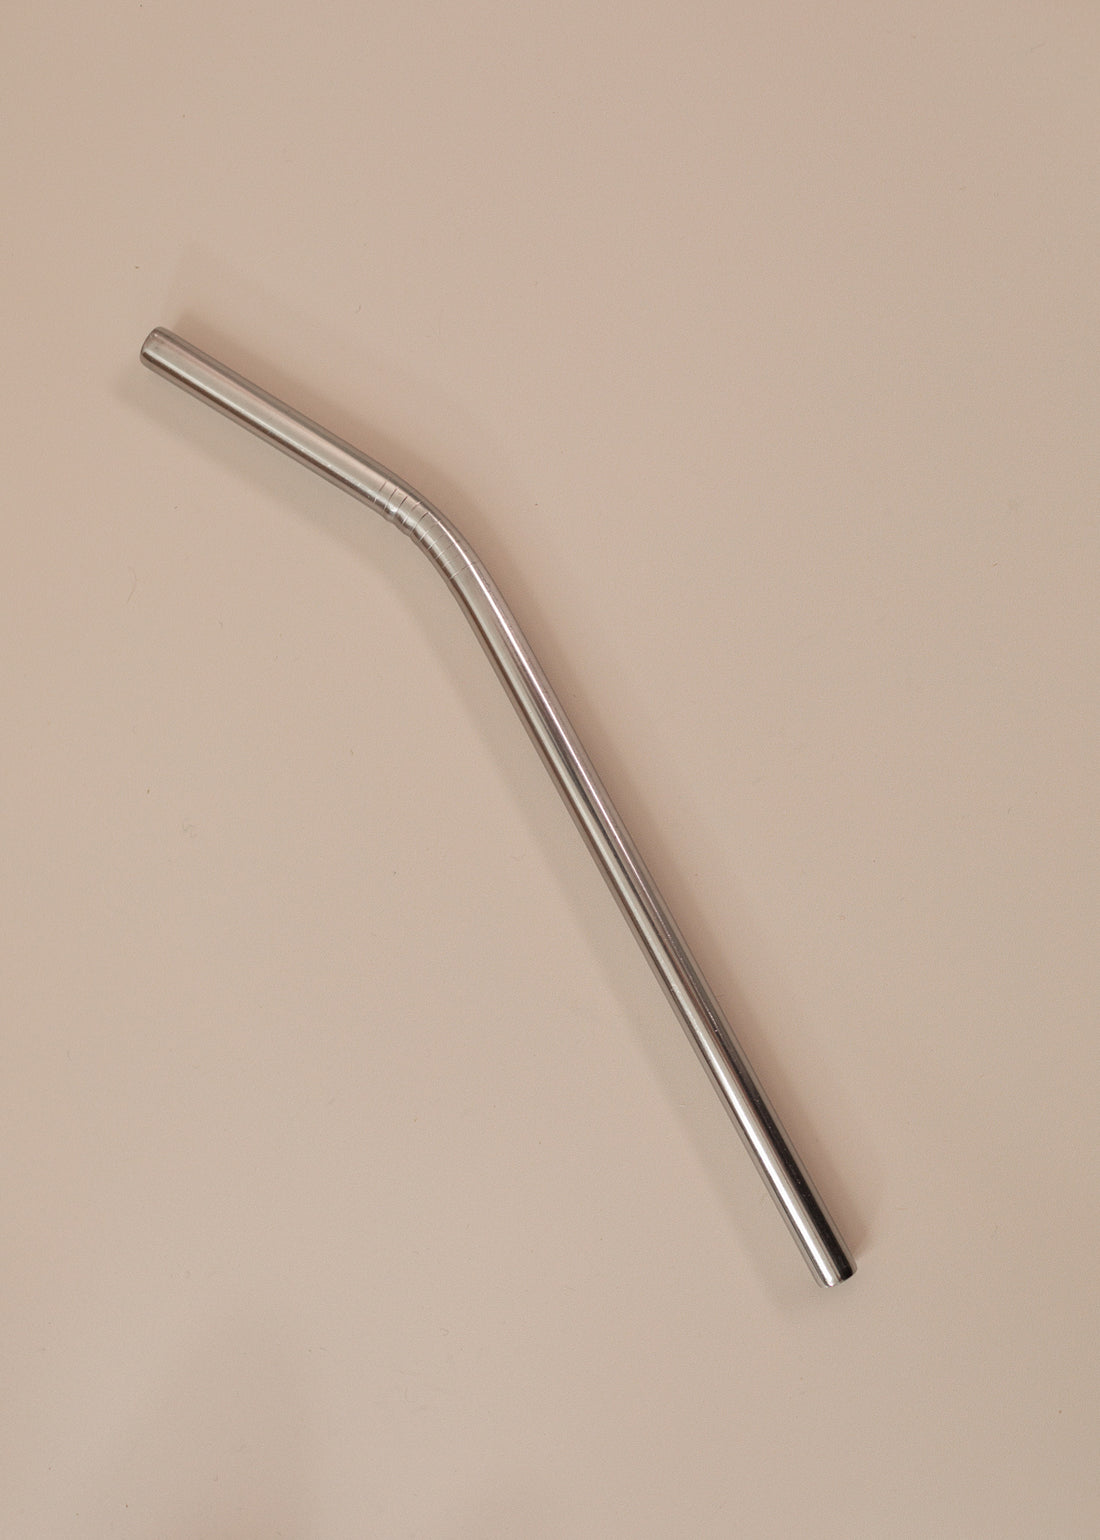 flatlay of a reusable silver straw